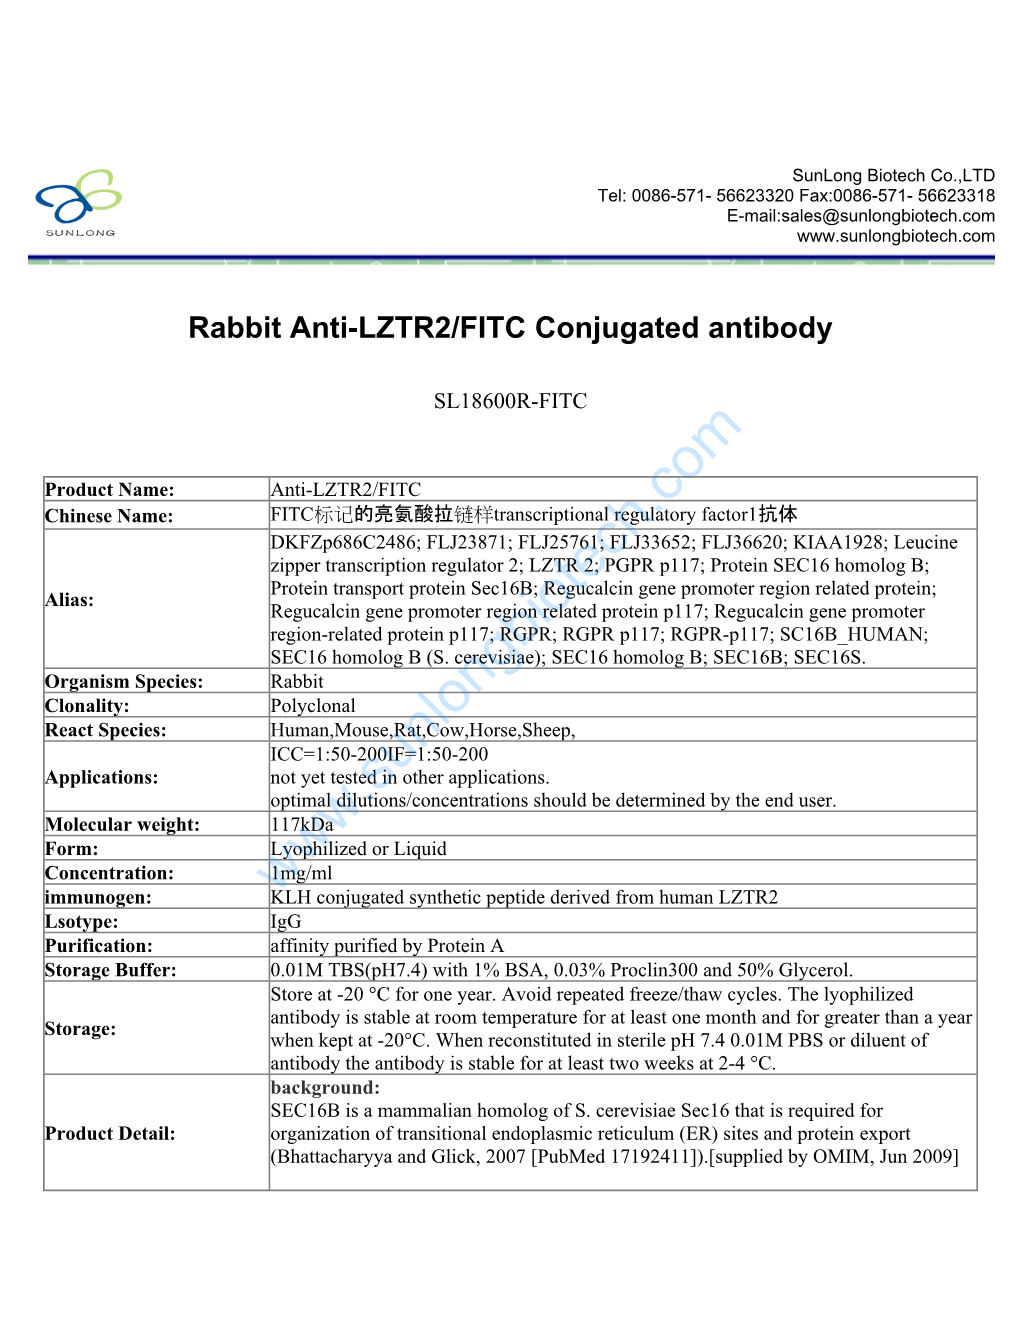 Rabbit Anti-LZTR2/FITC Conjugated Antibody-SL18600R-FITC